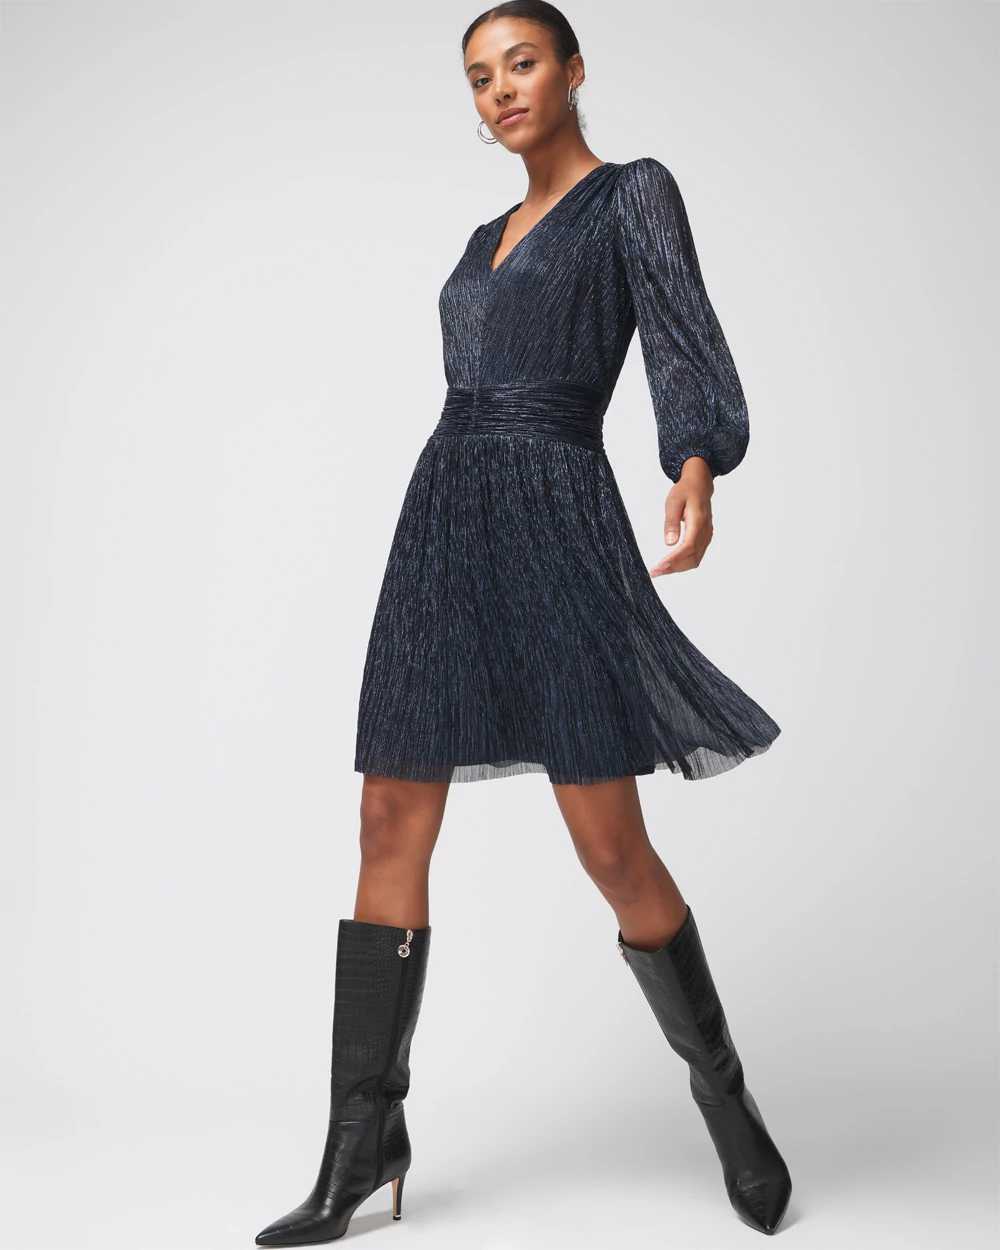 Long Sleeve Metallic Sparkle Mini Dress click to view larger image.